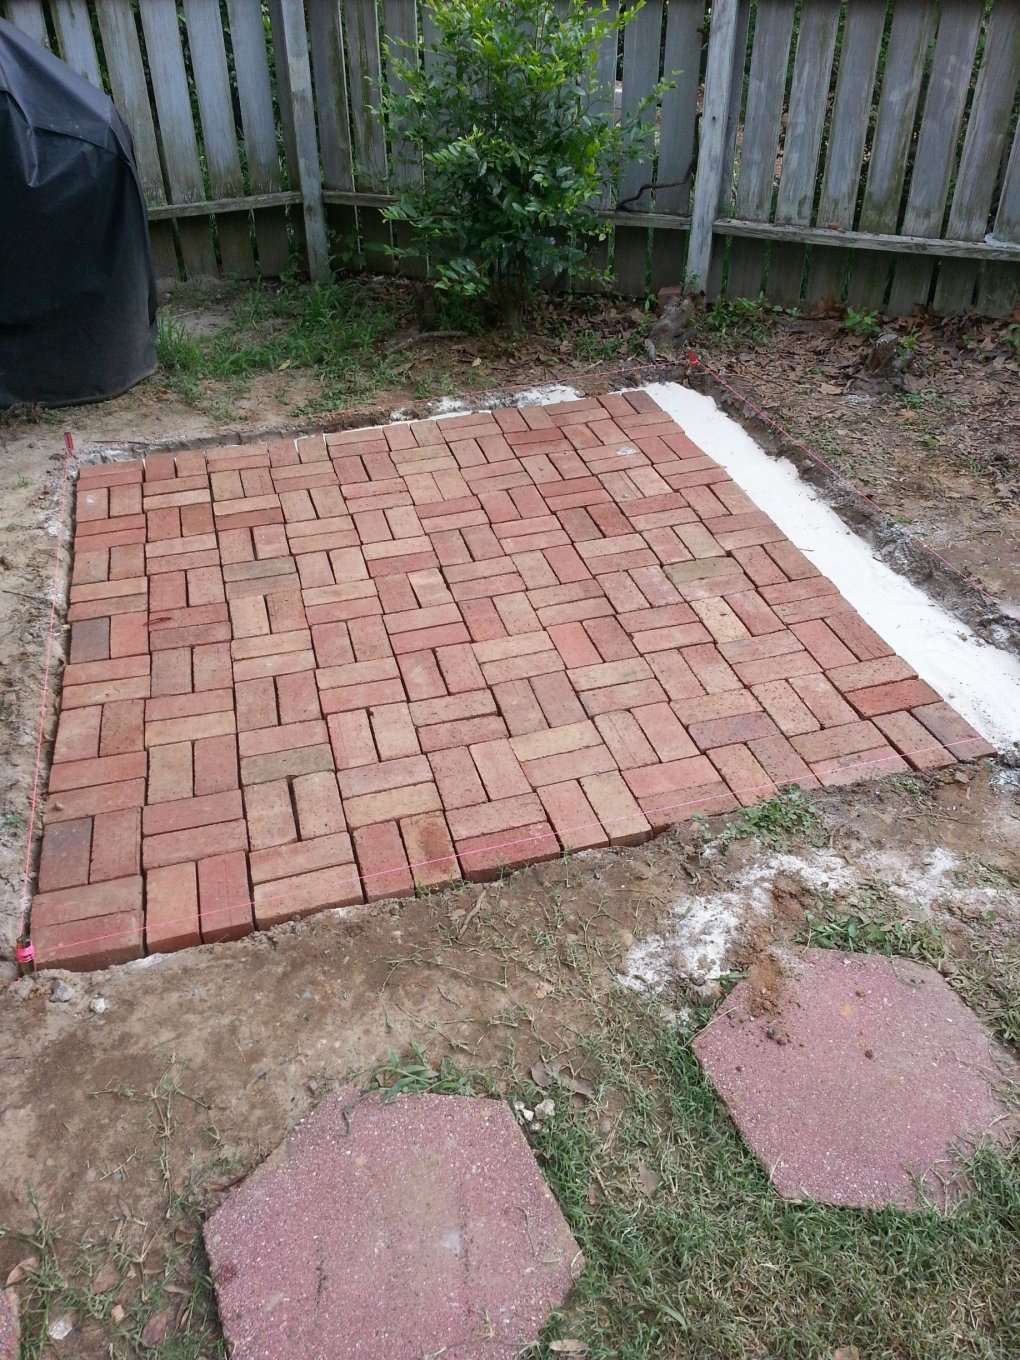 How to make Backyard Brick Patio